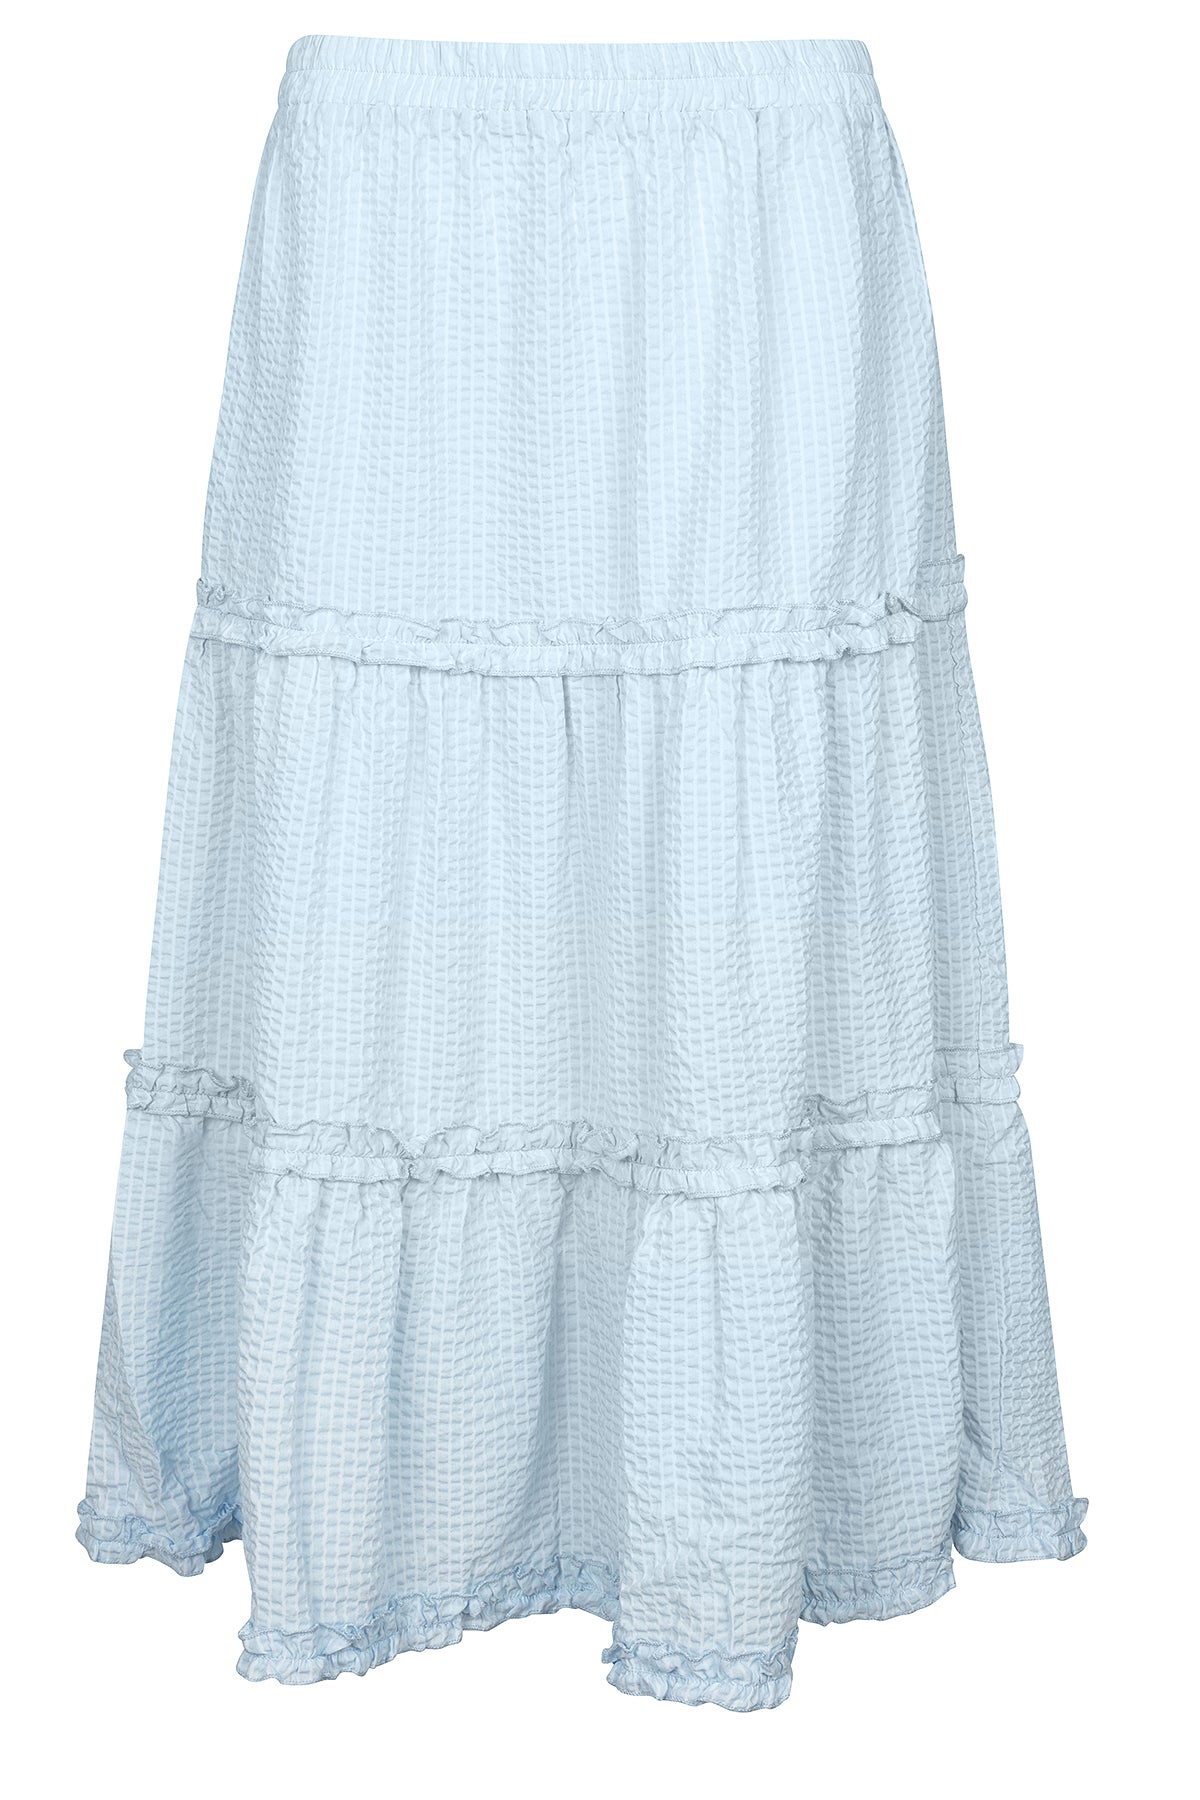 LUXZUZ // ONE TWO Babano Skirt Skirt 510 Chambray Blue